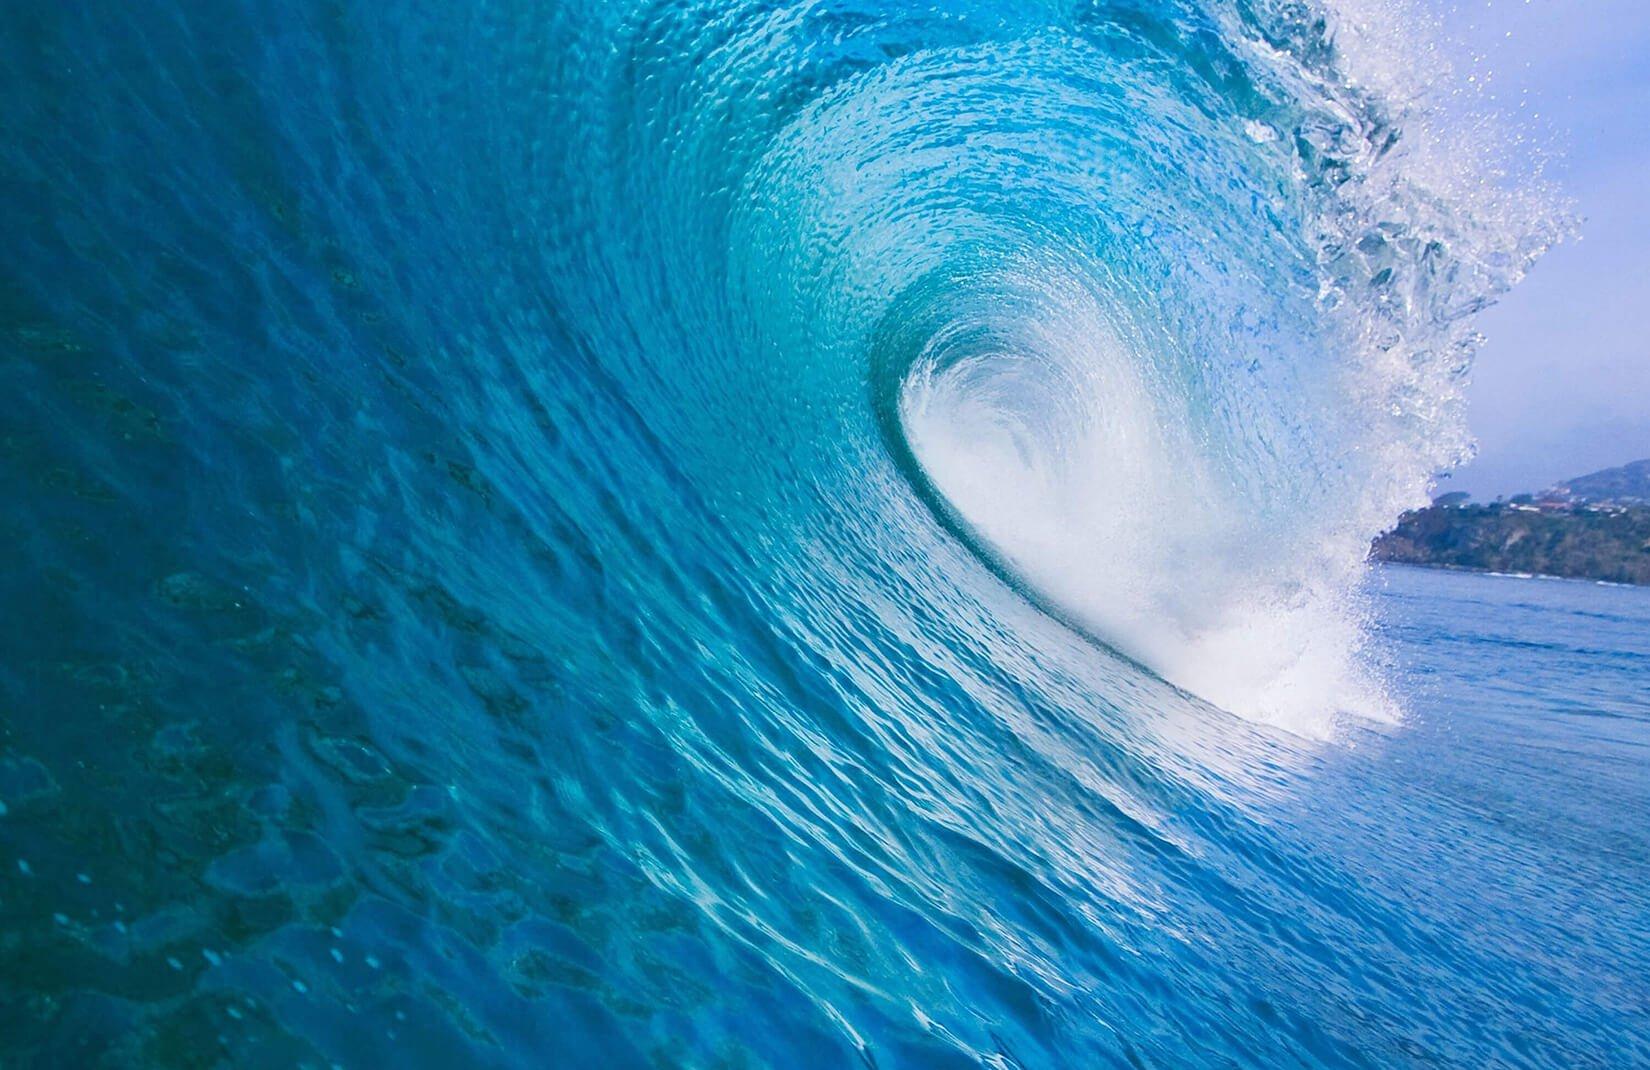 Tidal Wave Wallpaper Mural. Cool Wave Effect